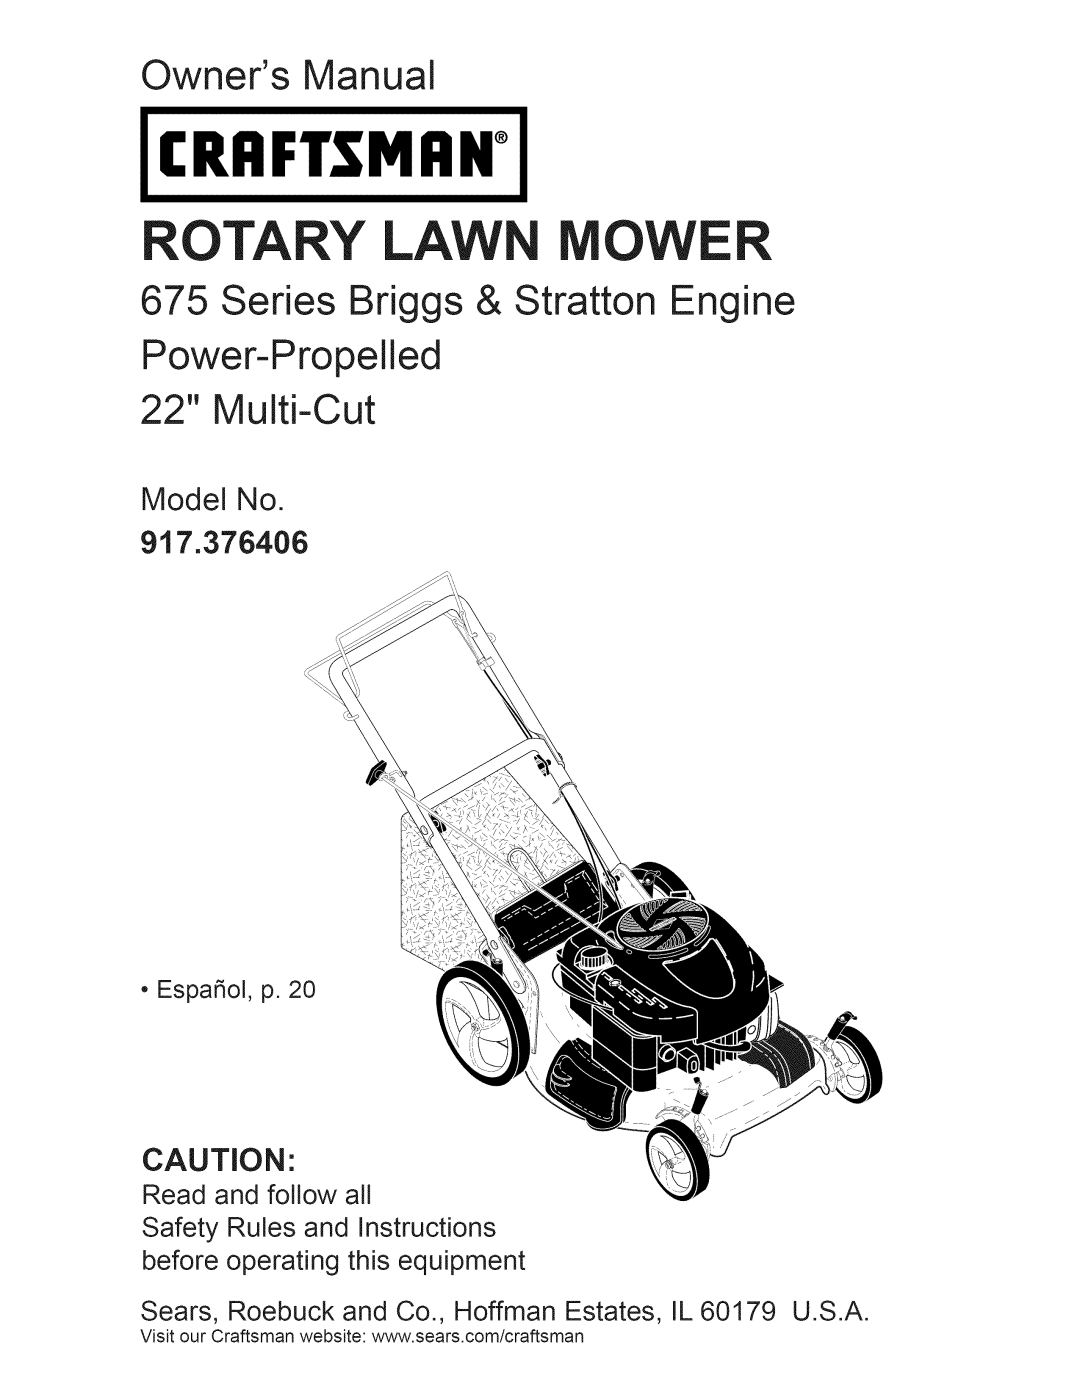 Craftsman owner manual Model No 917.376406, Craftsman, Rotary Lawn Mower, Series Briggs & Stratton Engine 